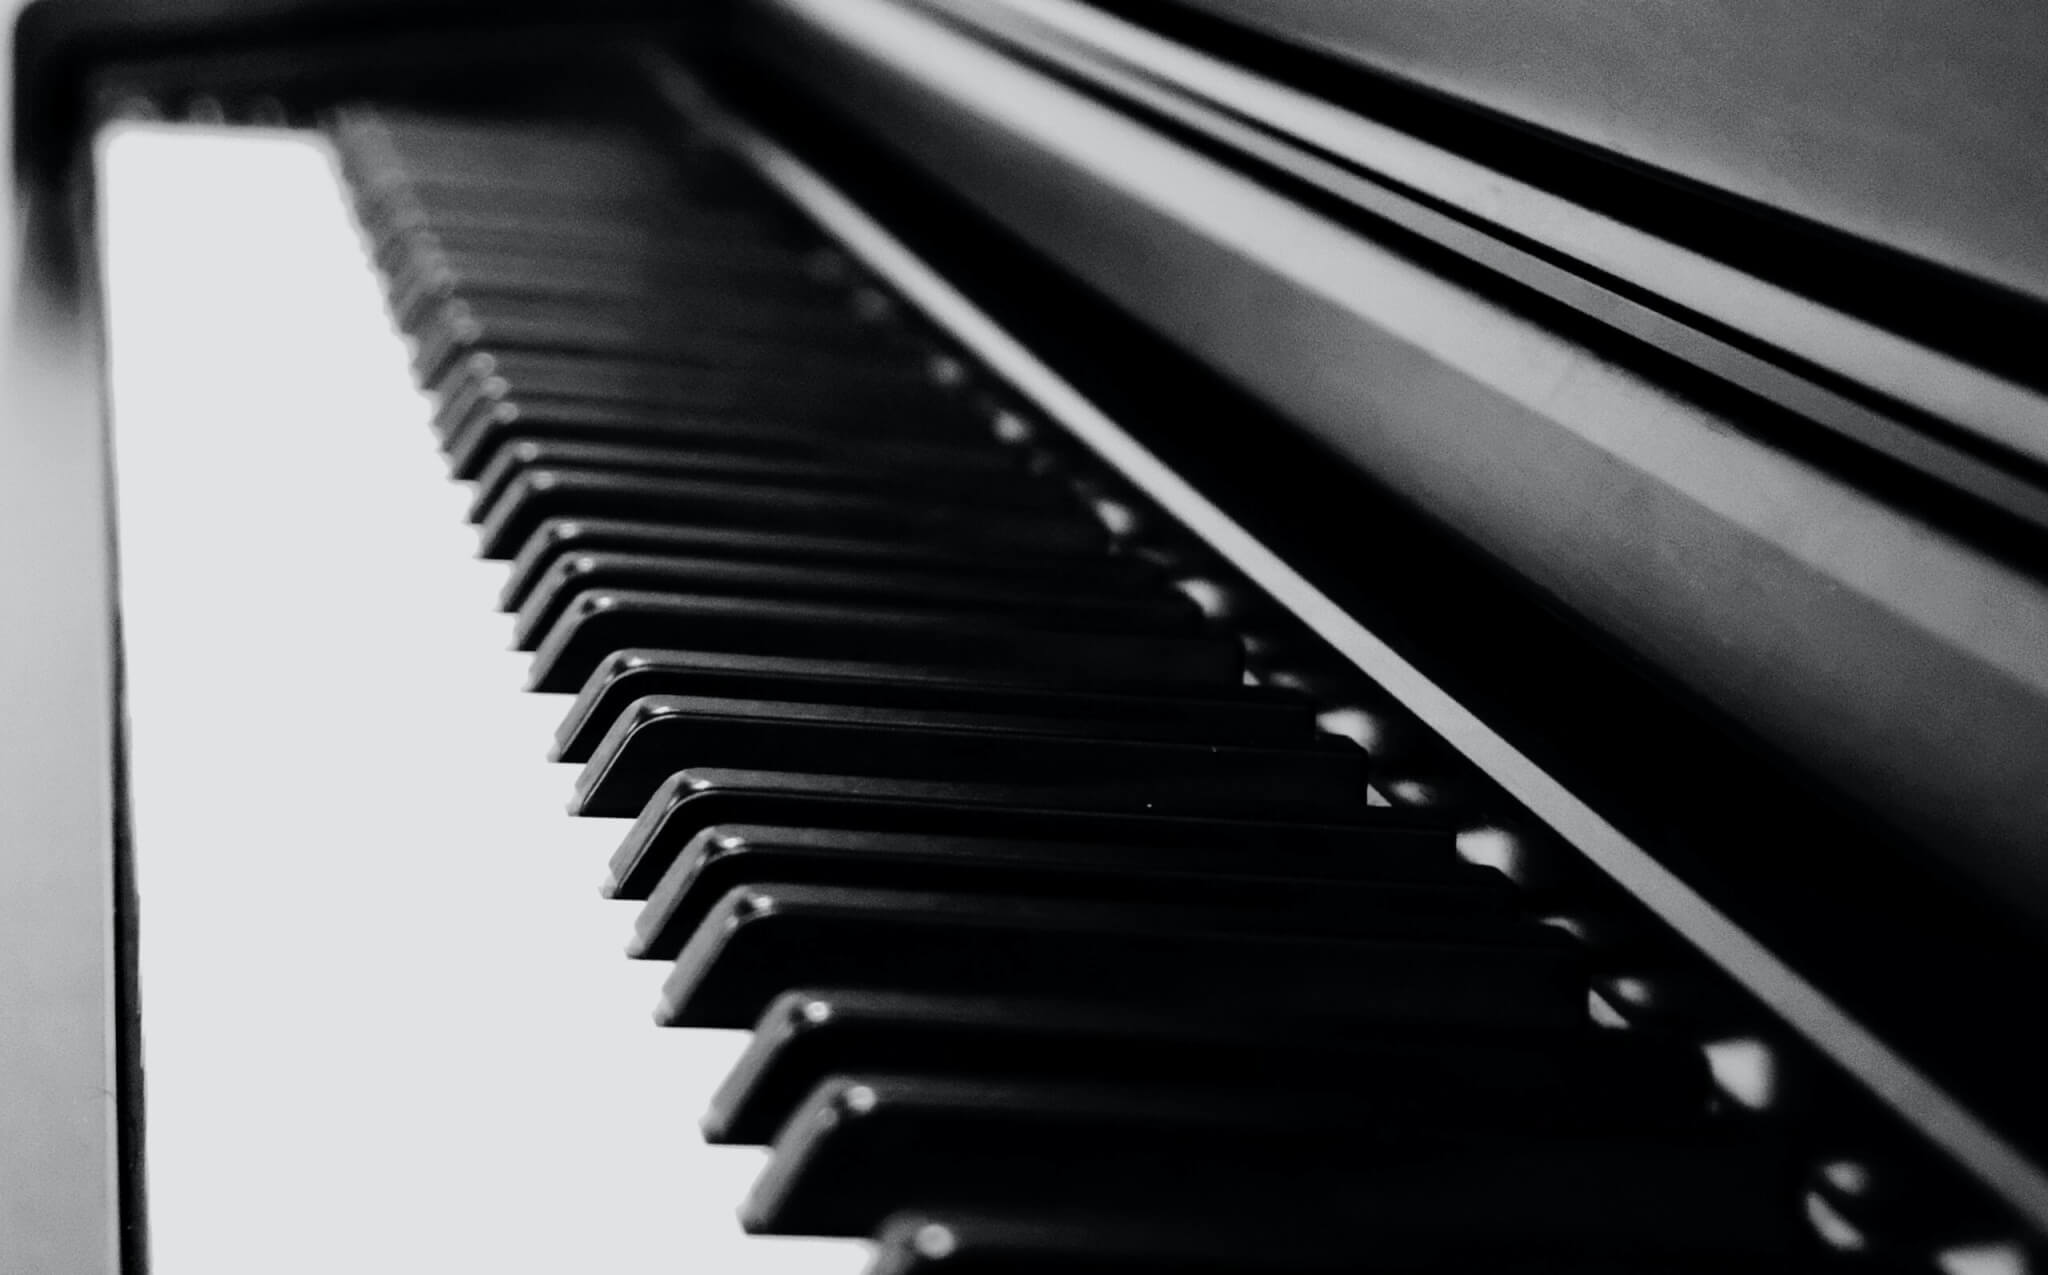 Yamaha digital piano keys